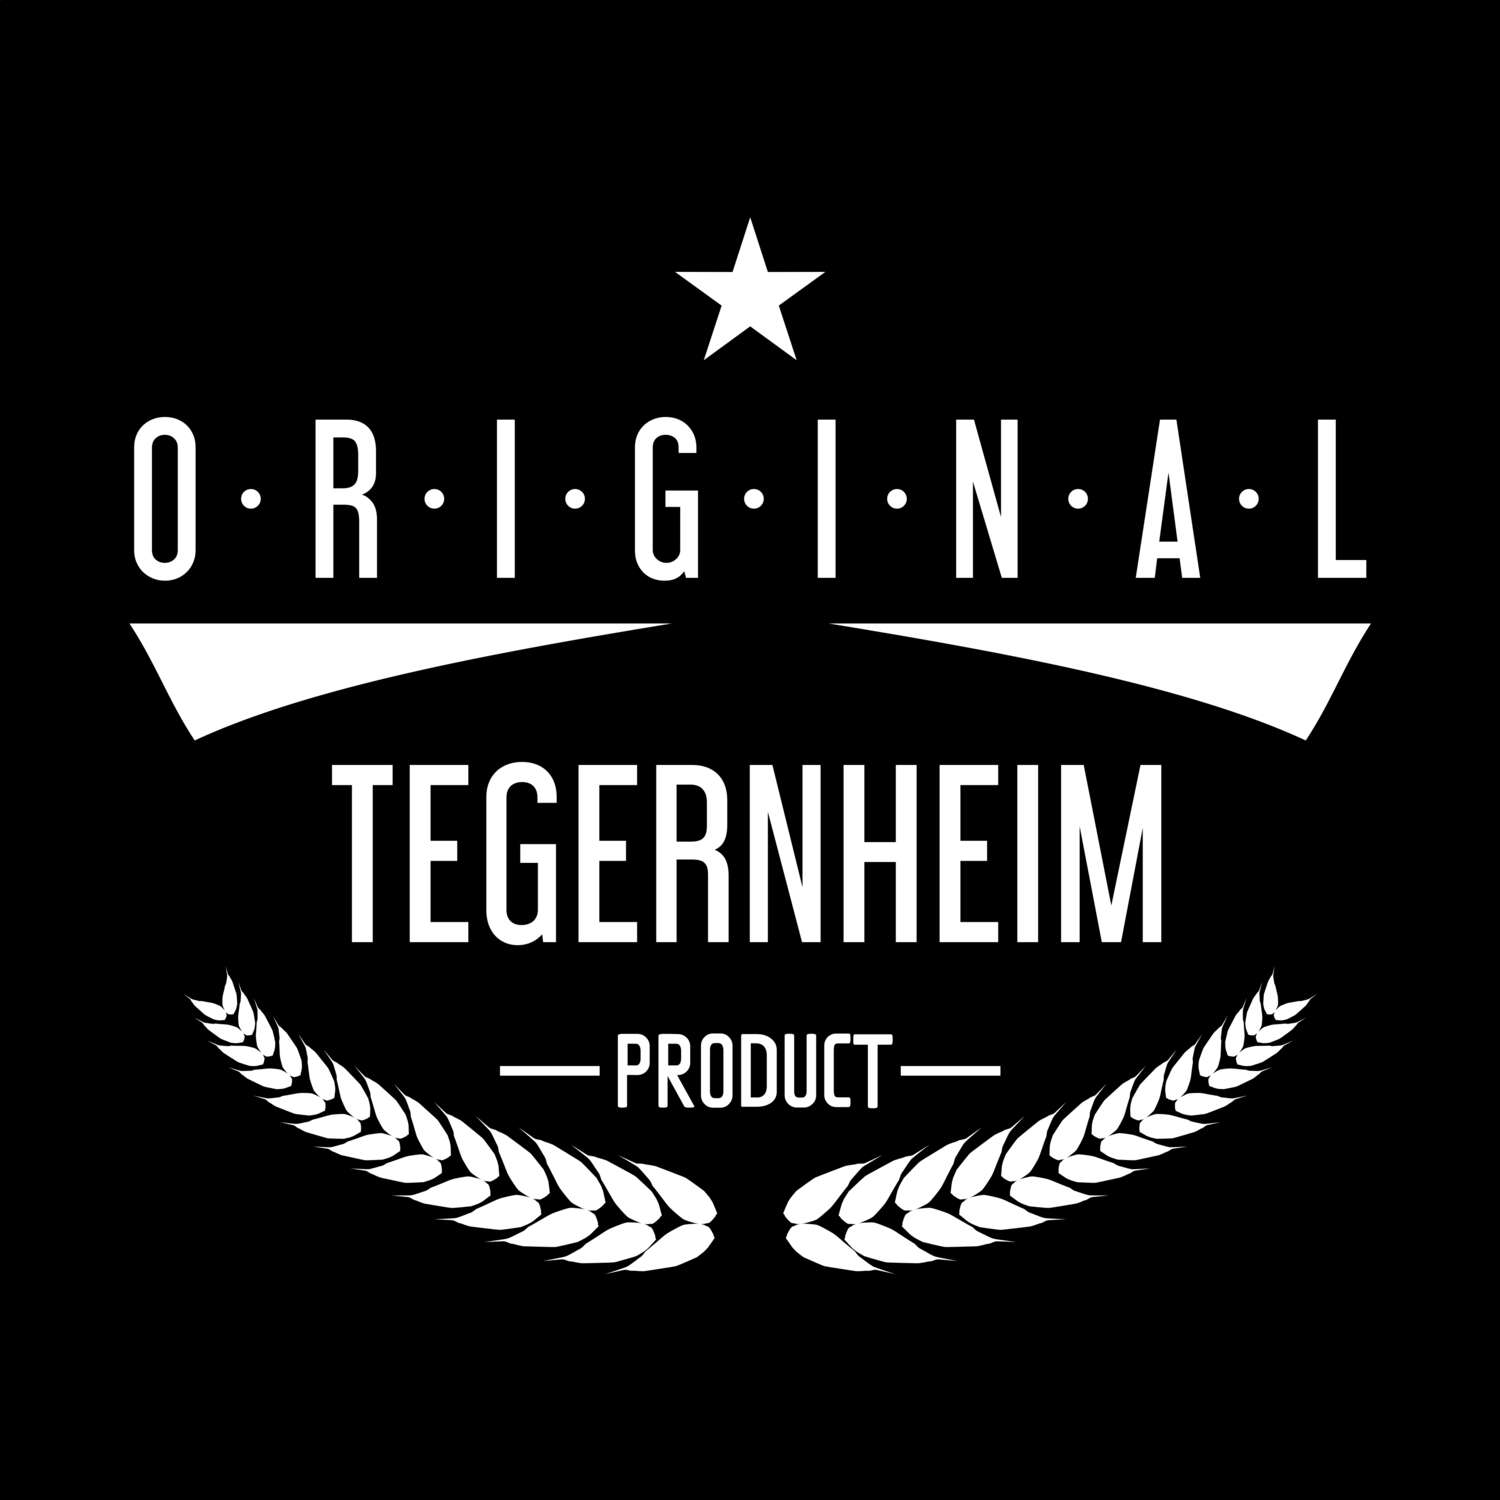 Tegernheim T-Shirt »Original Product«